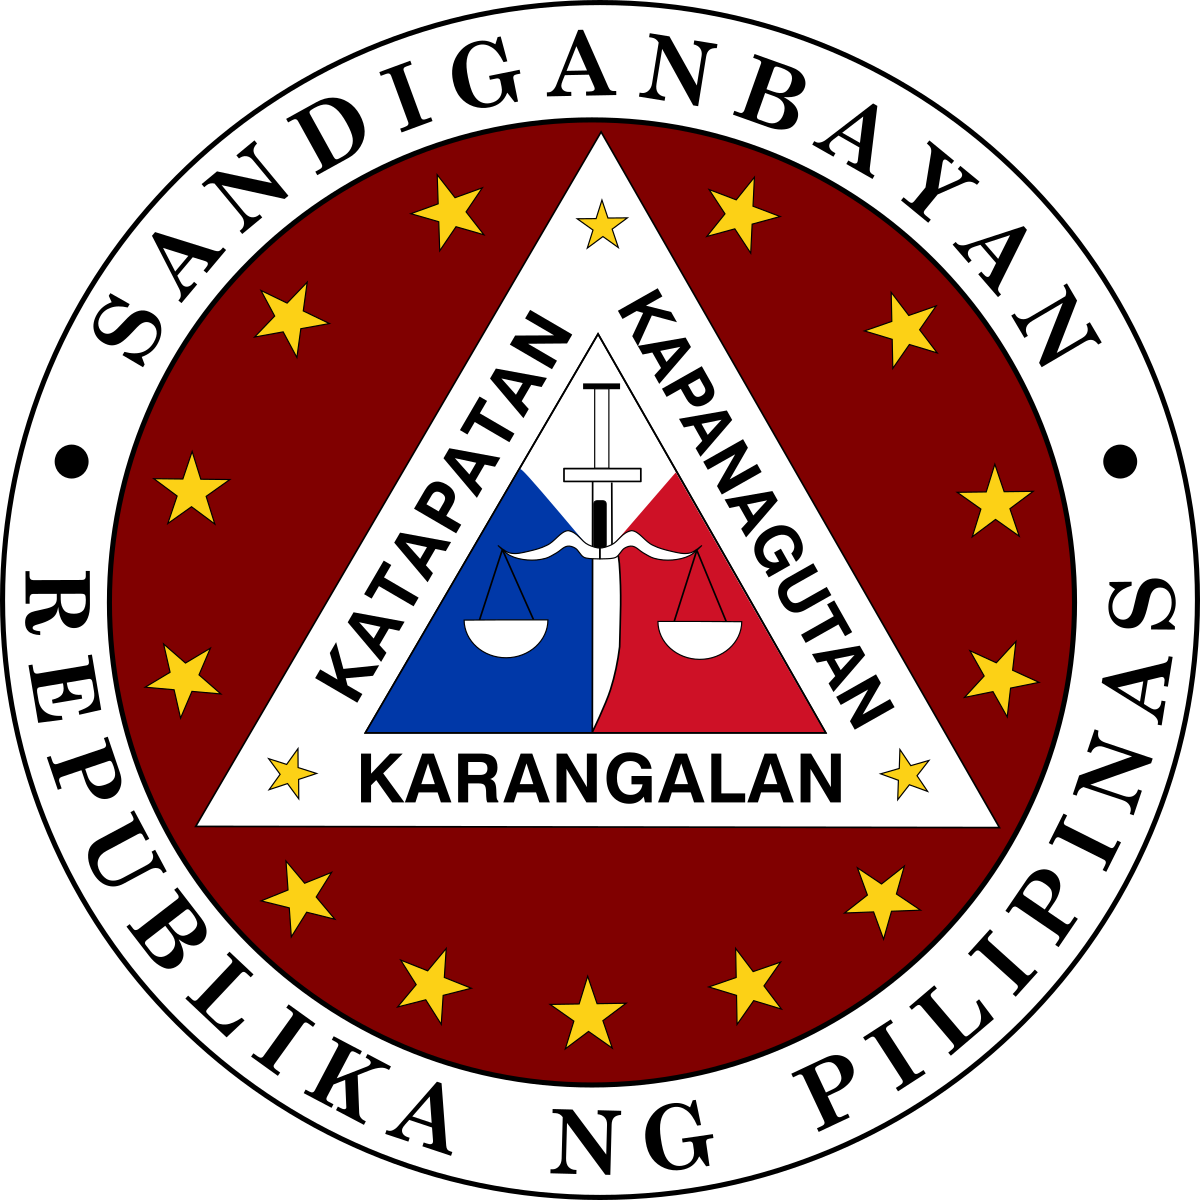 Sandiganbayan wikipedia . Court clipart exclusive jurisdiction